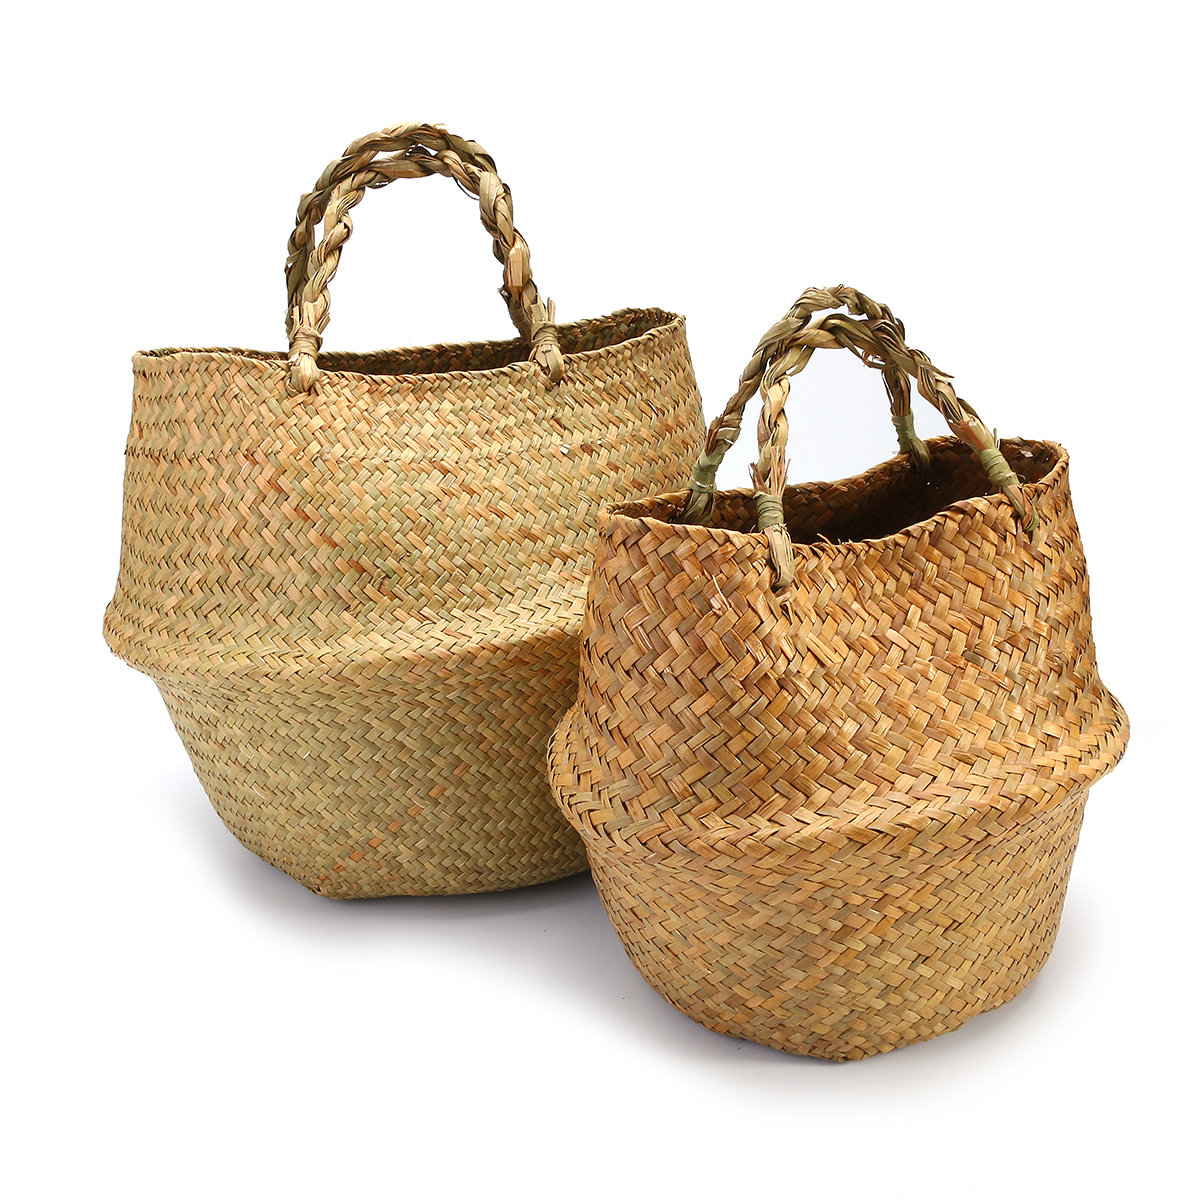 

2Pcs Seagrass Flower Belly Basket Storage Holder Plant Pot Laundry Folding Portable Organizer Bag